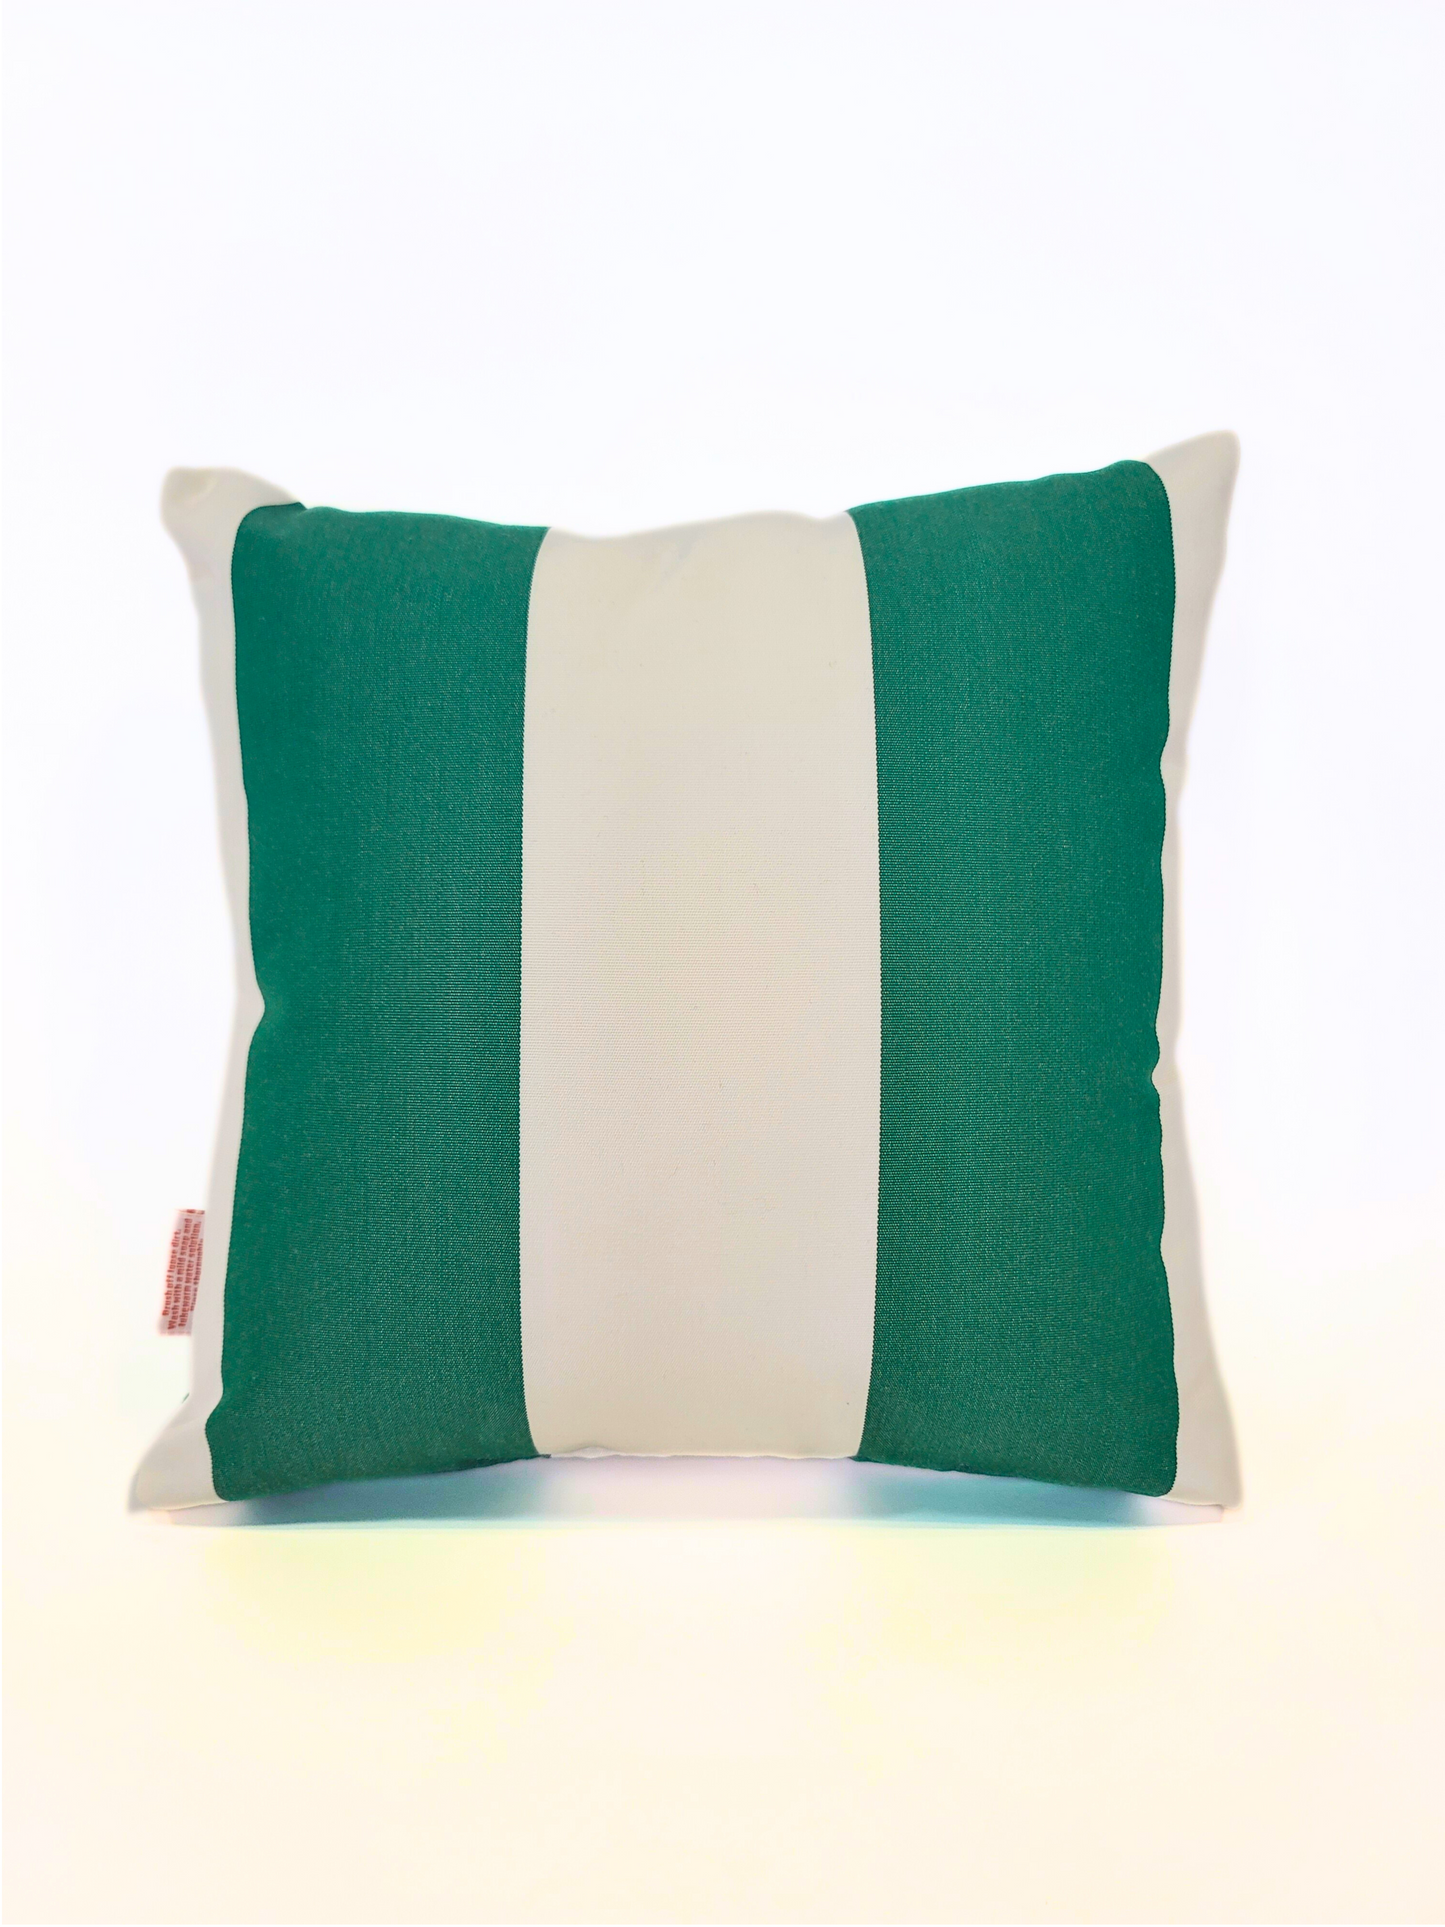 Sunbrella "Cabana Emerald" Indoor/Outdoor Toss Pillow Cover